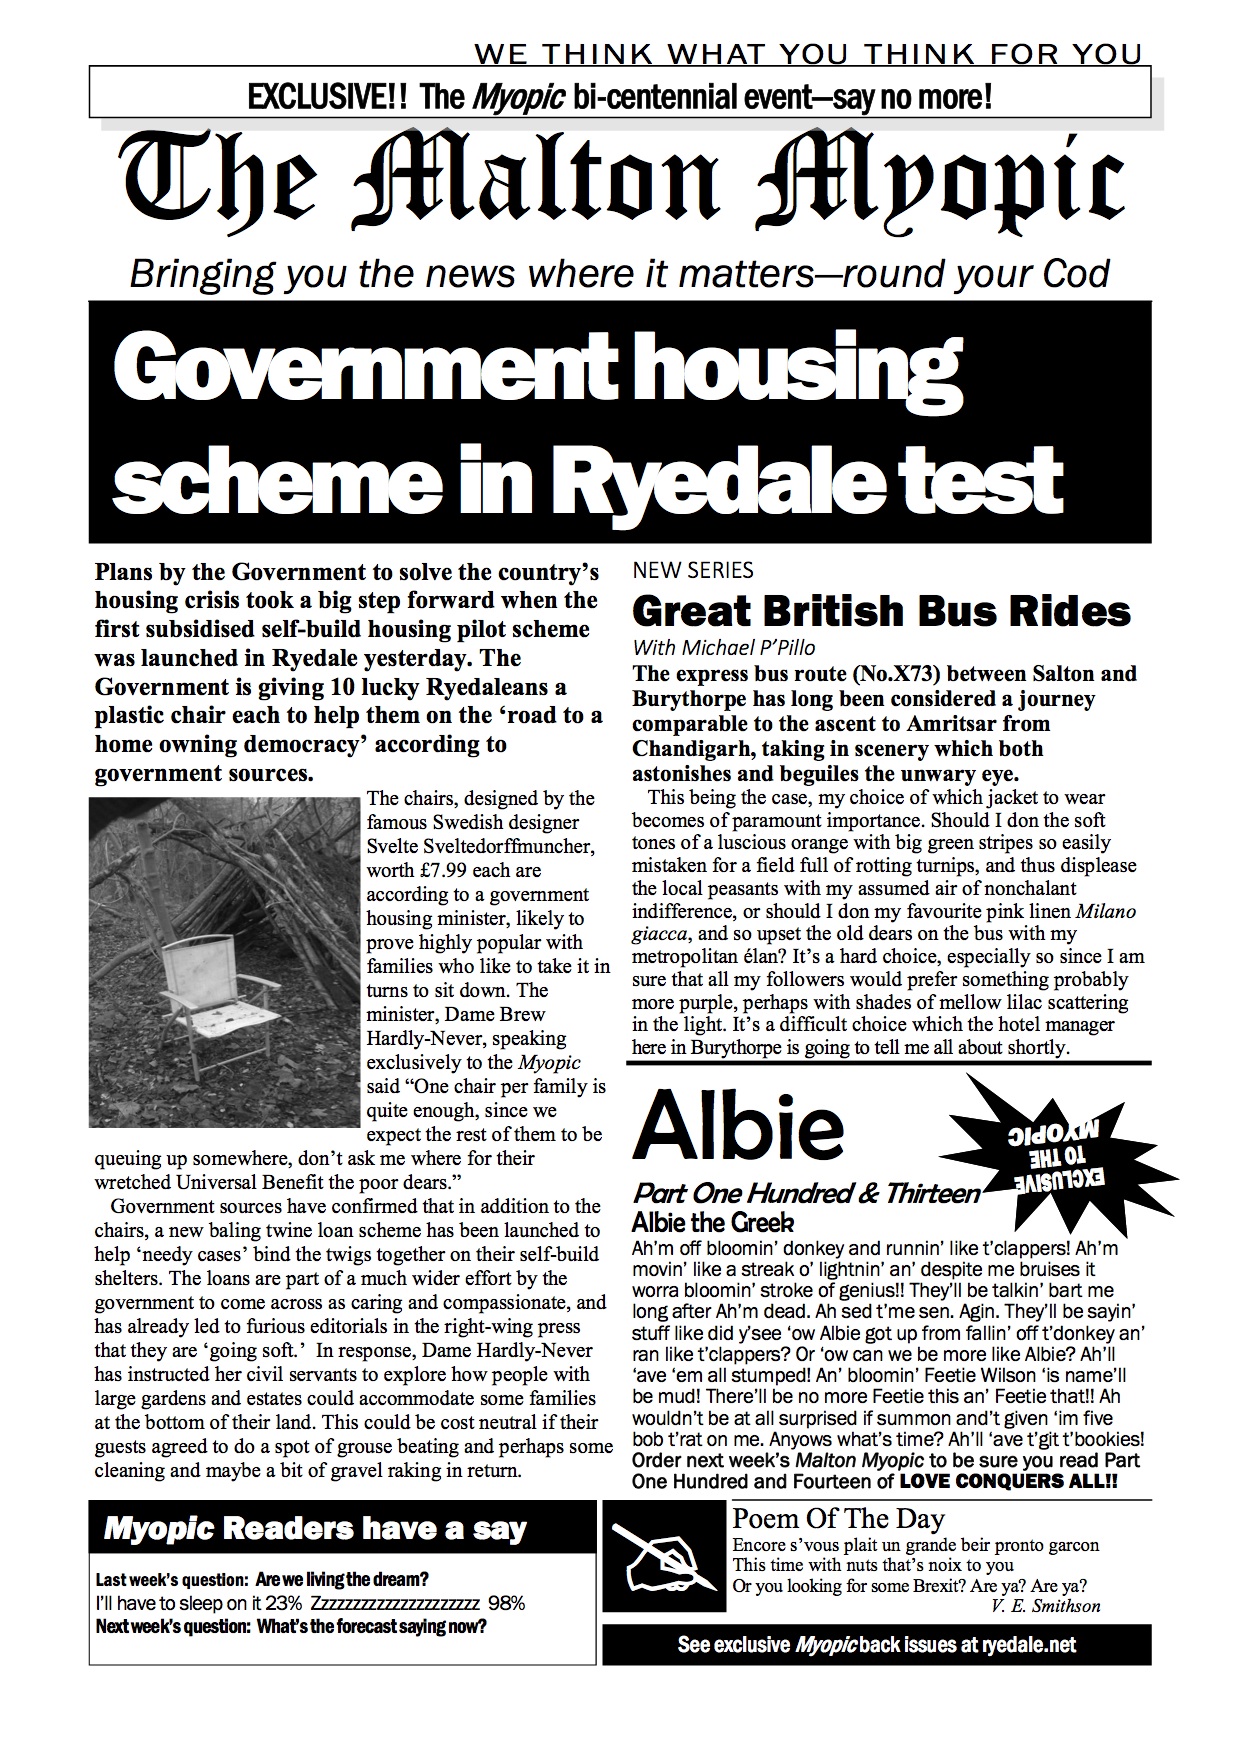 Government housing scheme to start in Ryedale 2017.